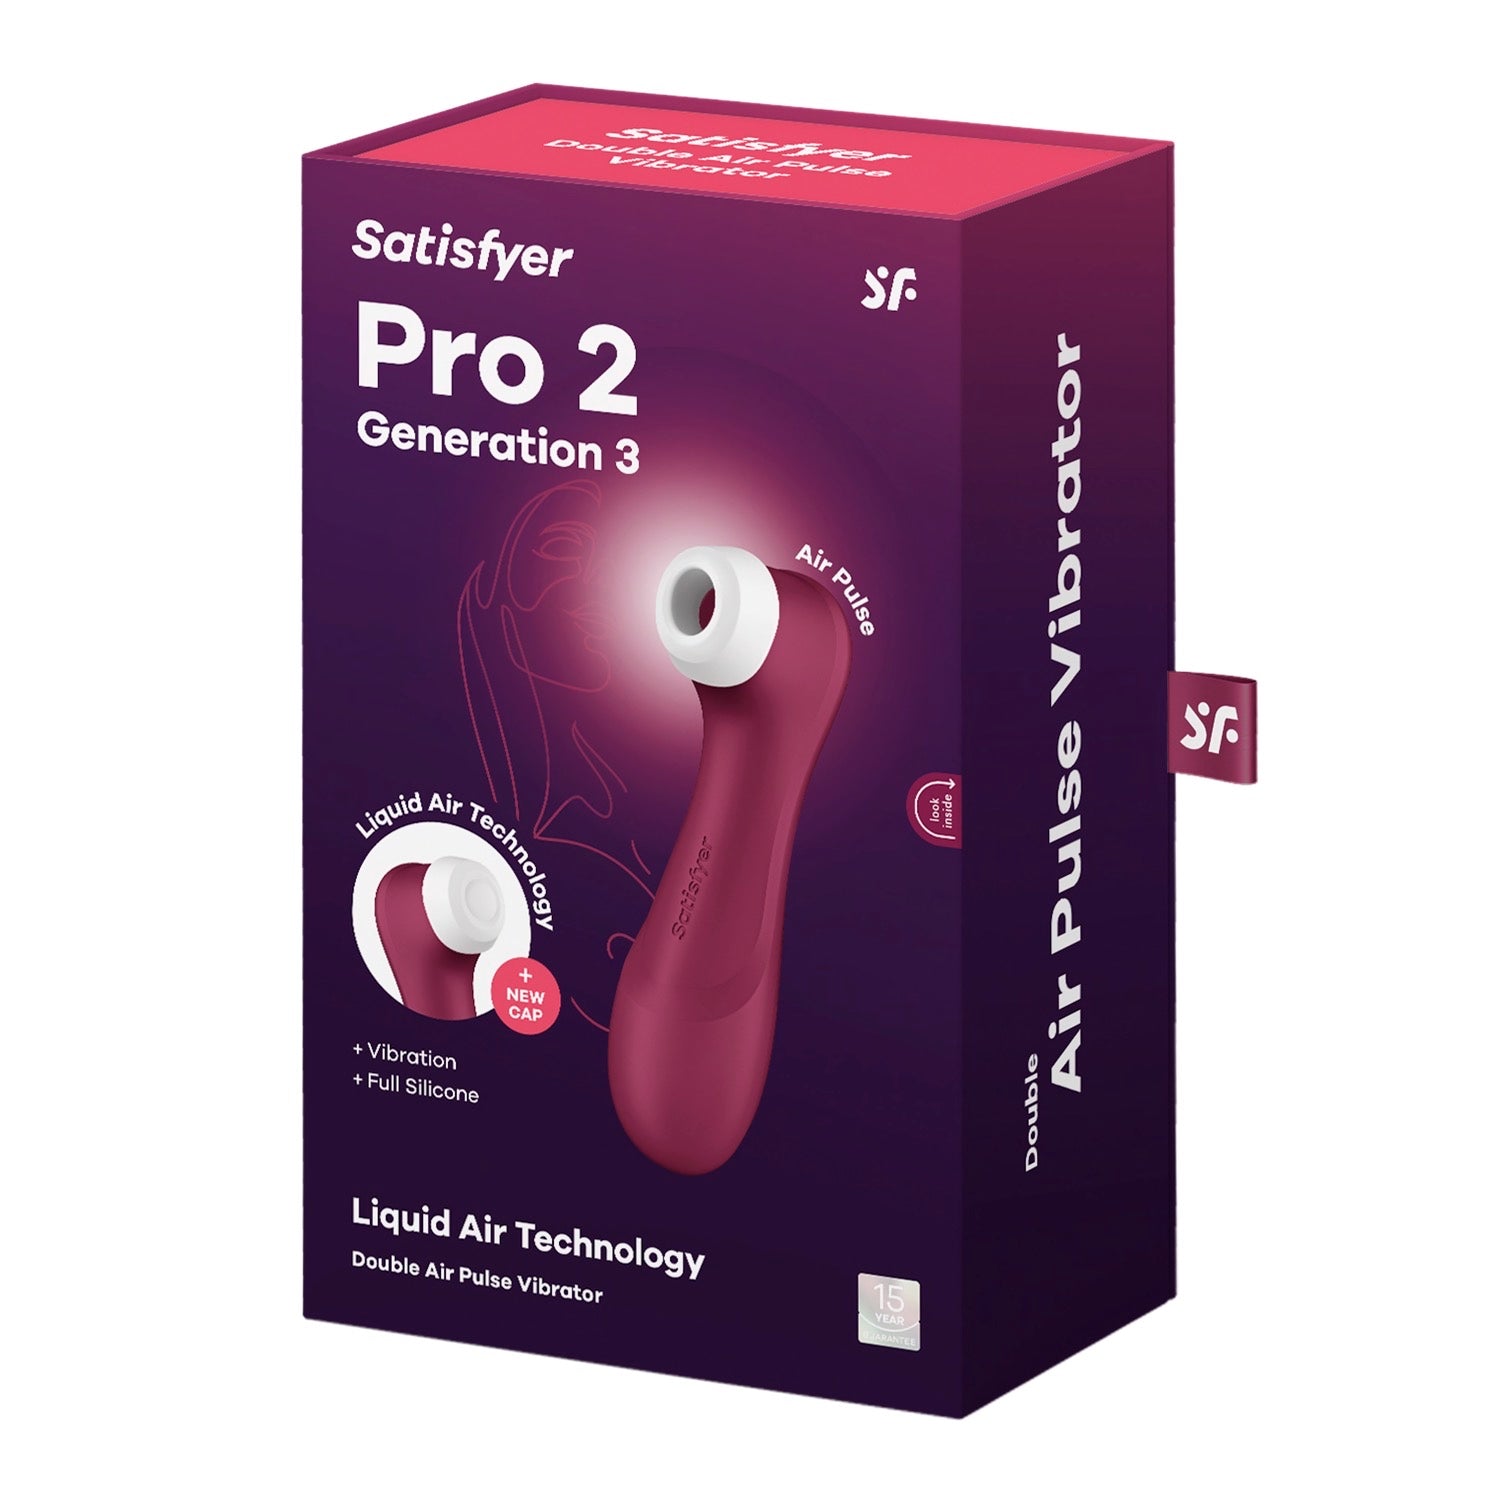 Satisfyer Pro 2 Generation 3 - Red by Satisfyer